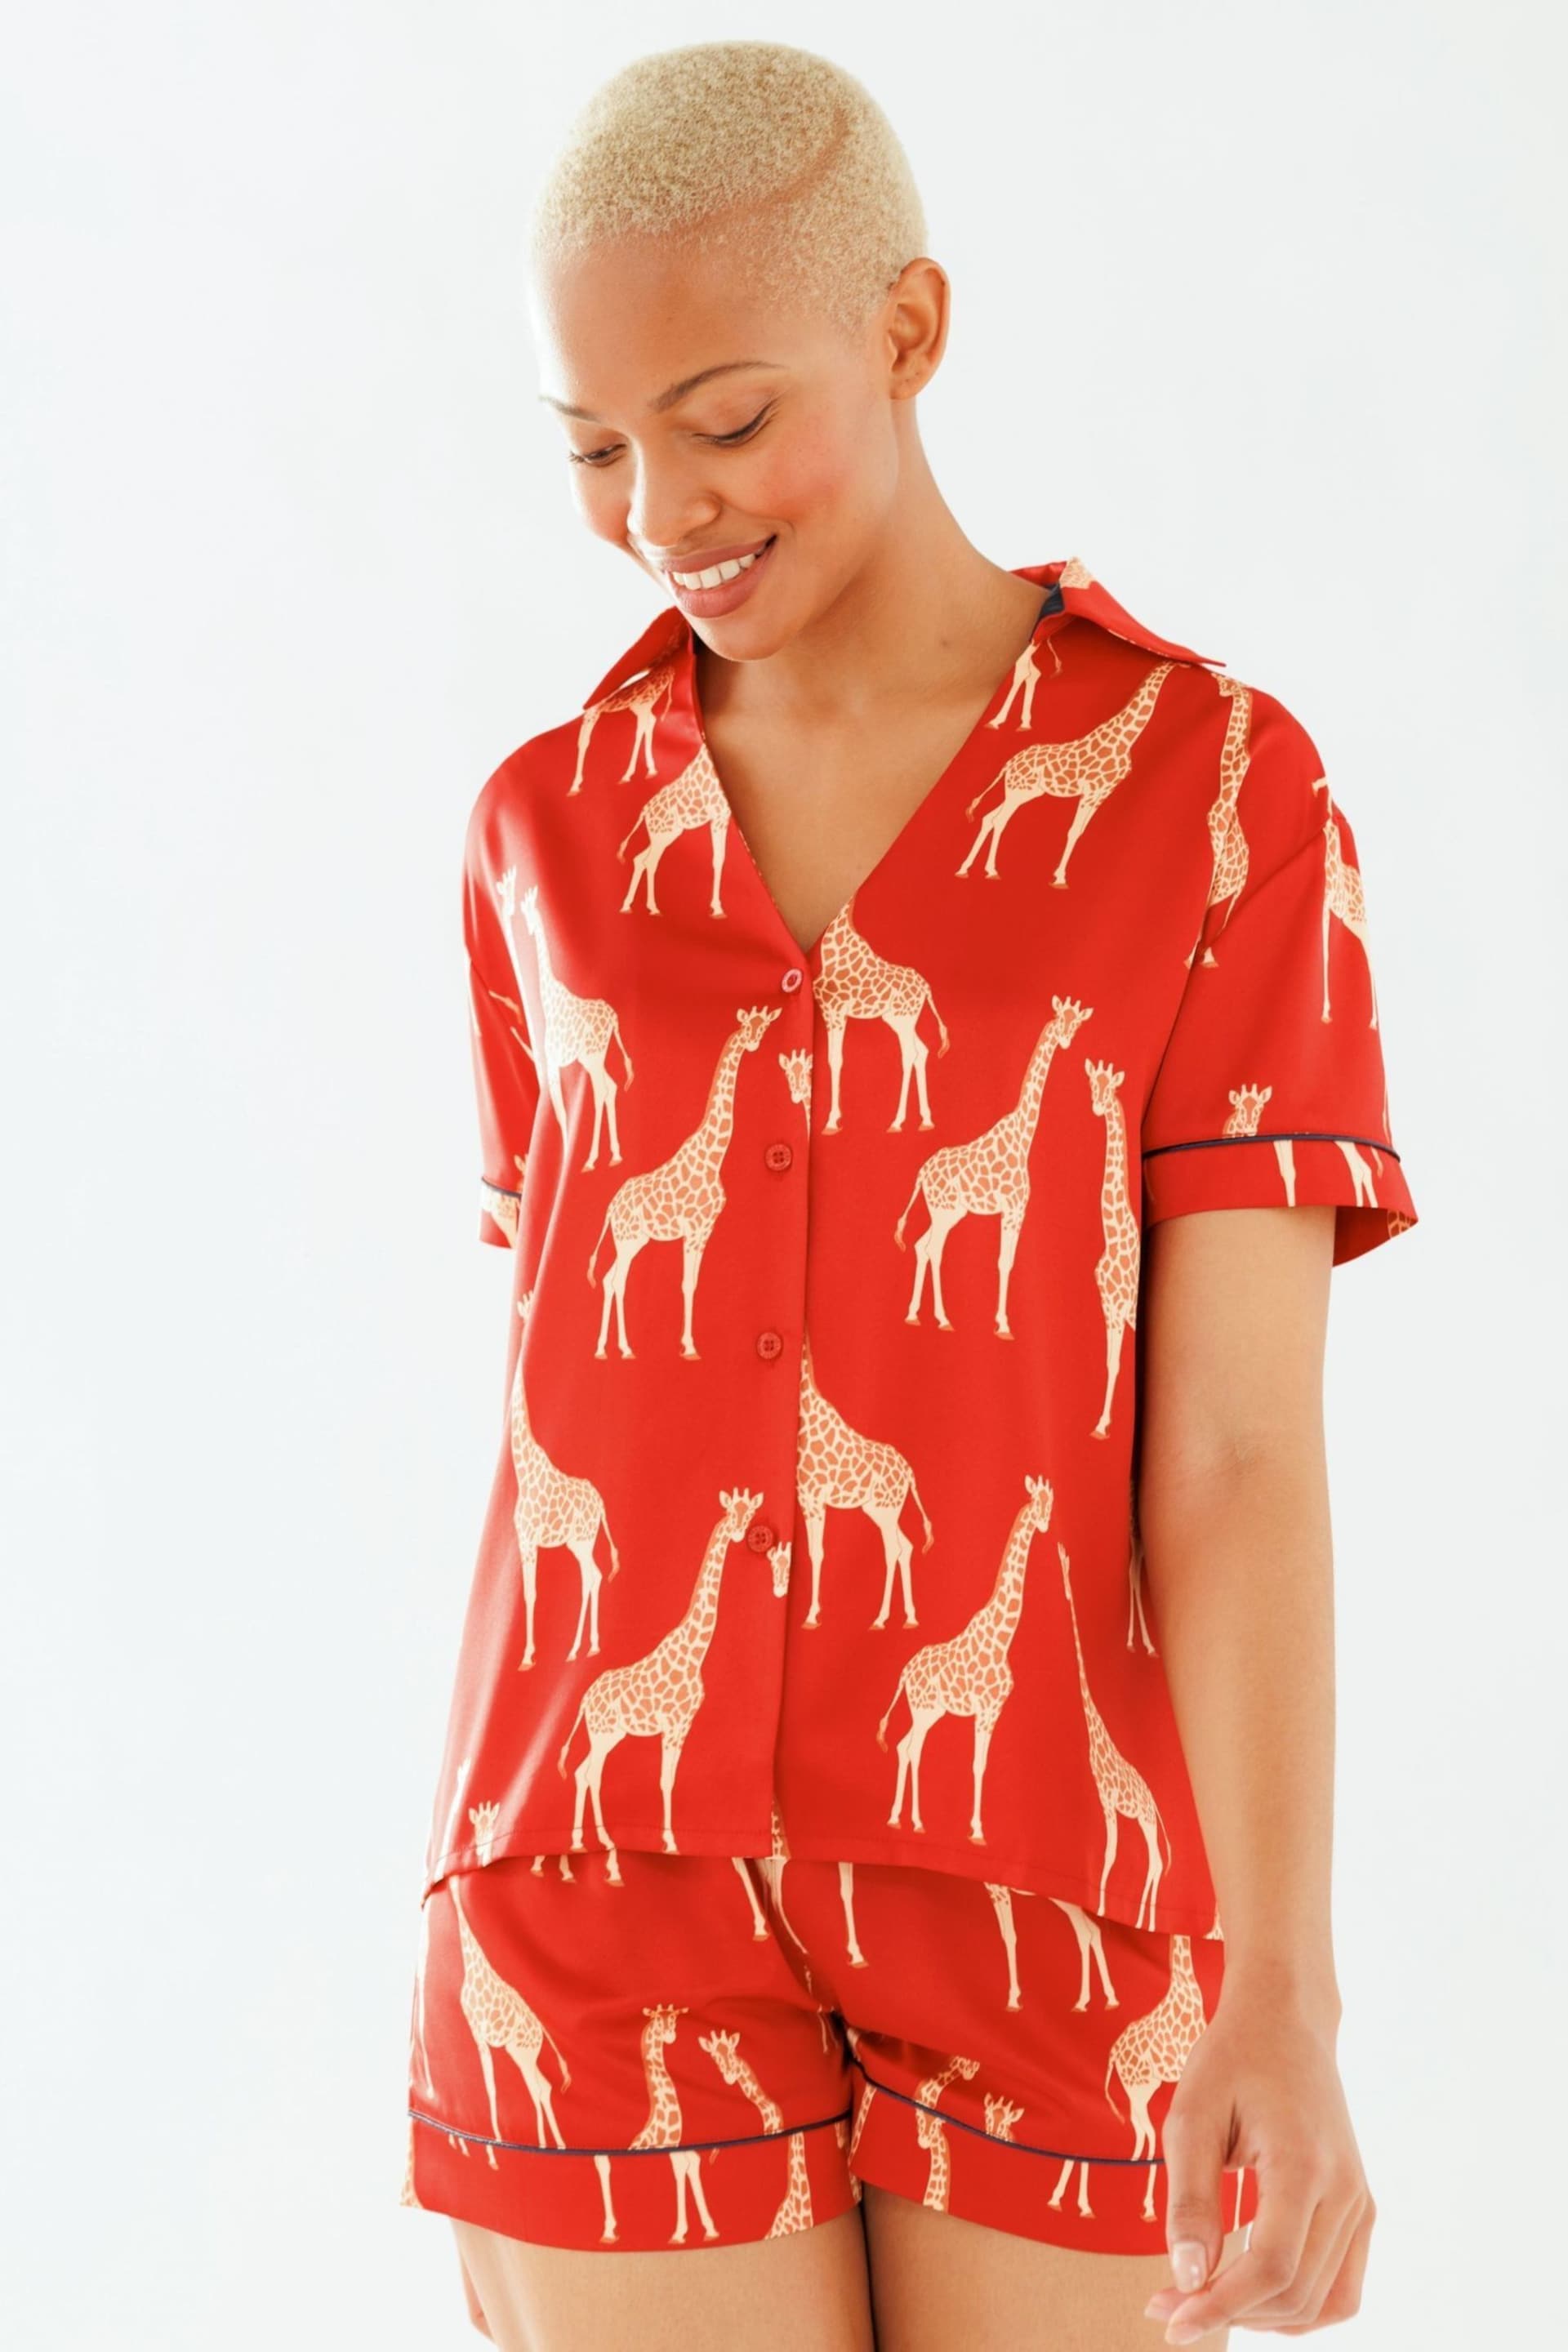 Chelsea Peers Red Satin Giraffe Print Short Pyjama Set - Image 5 of 5